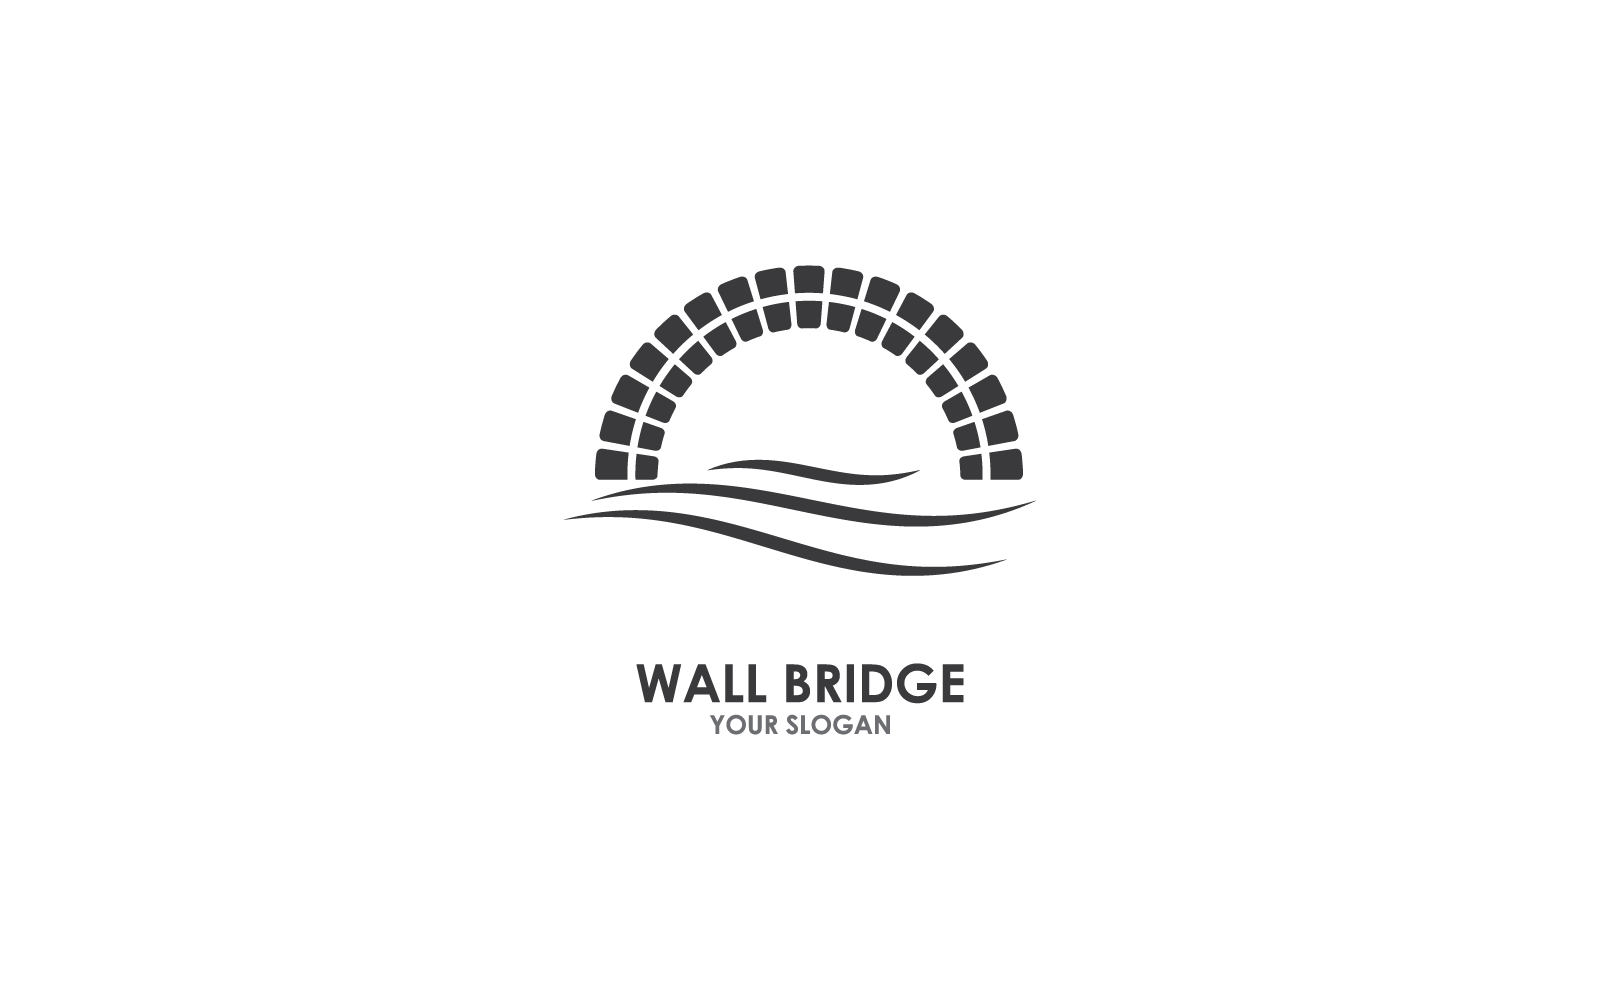 Wall bridge logo illustration vector design